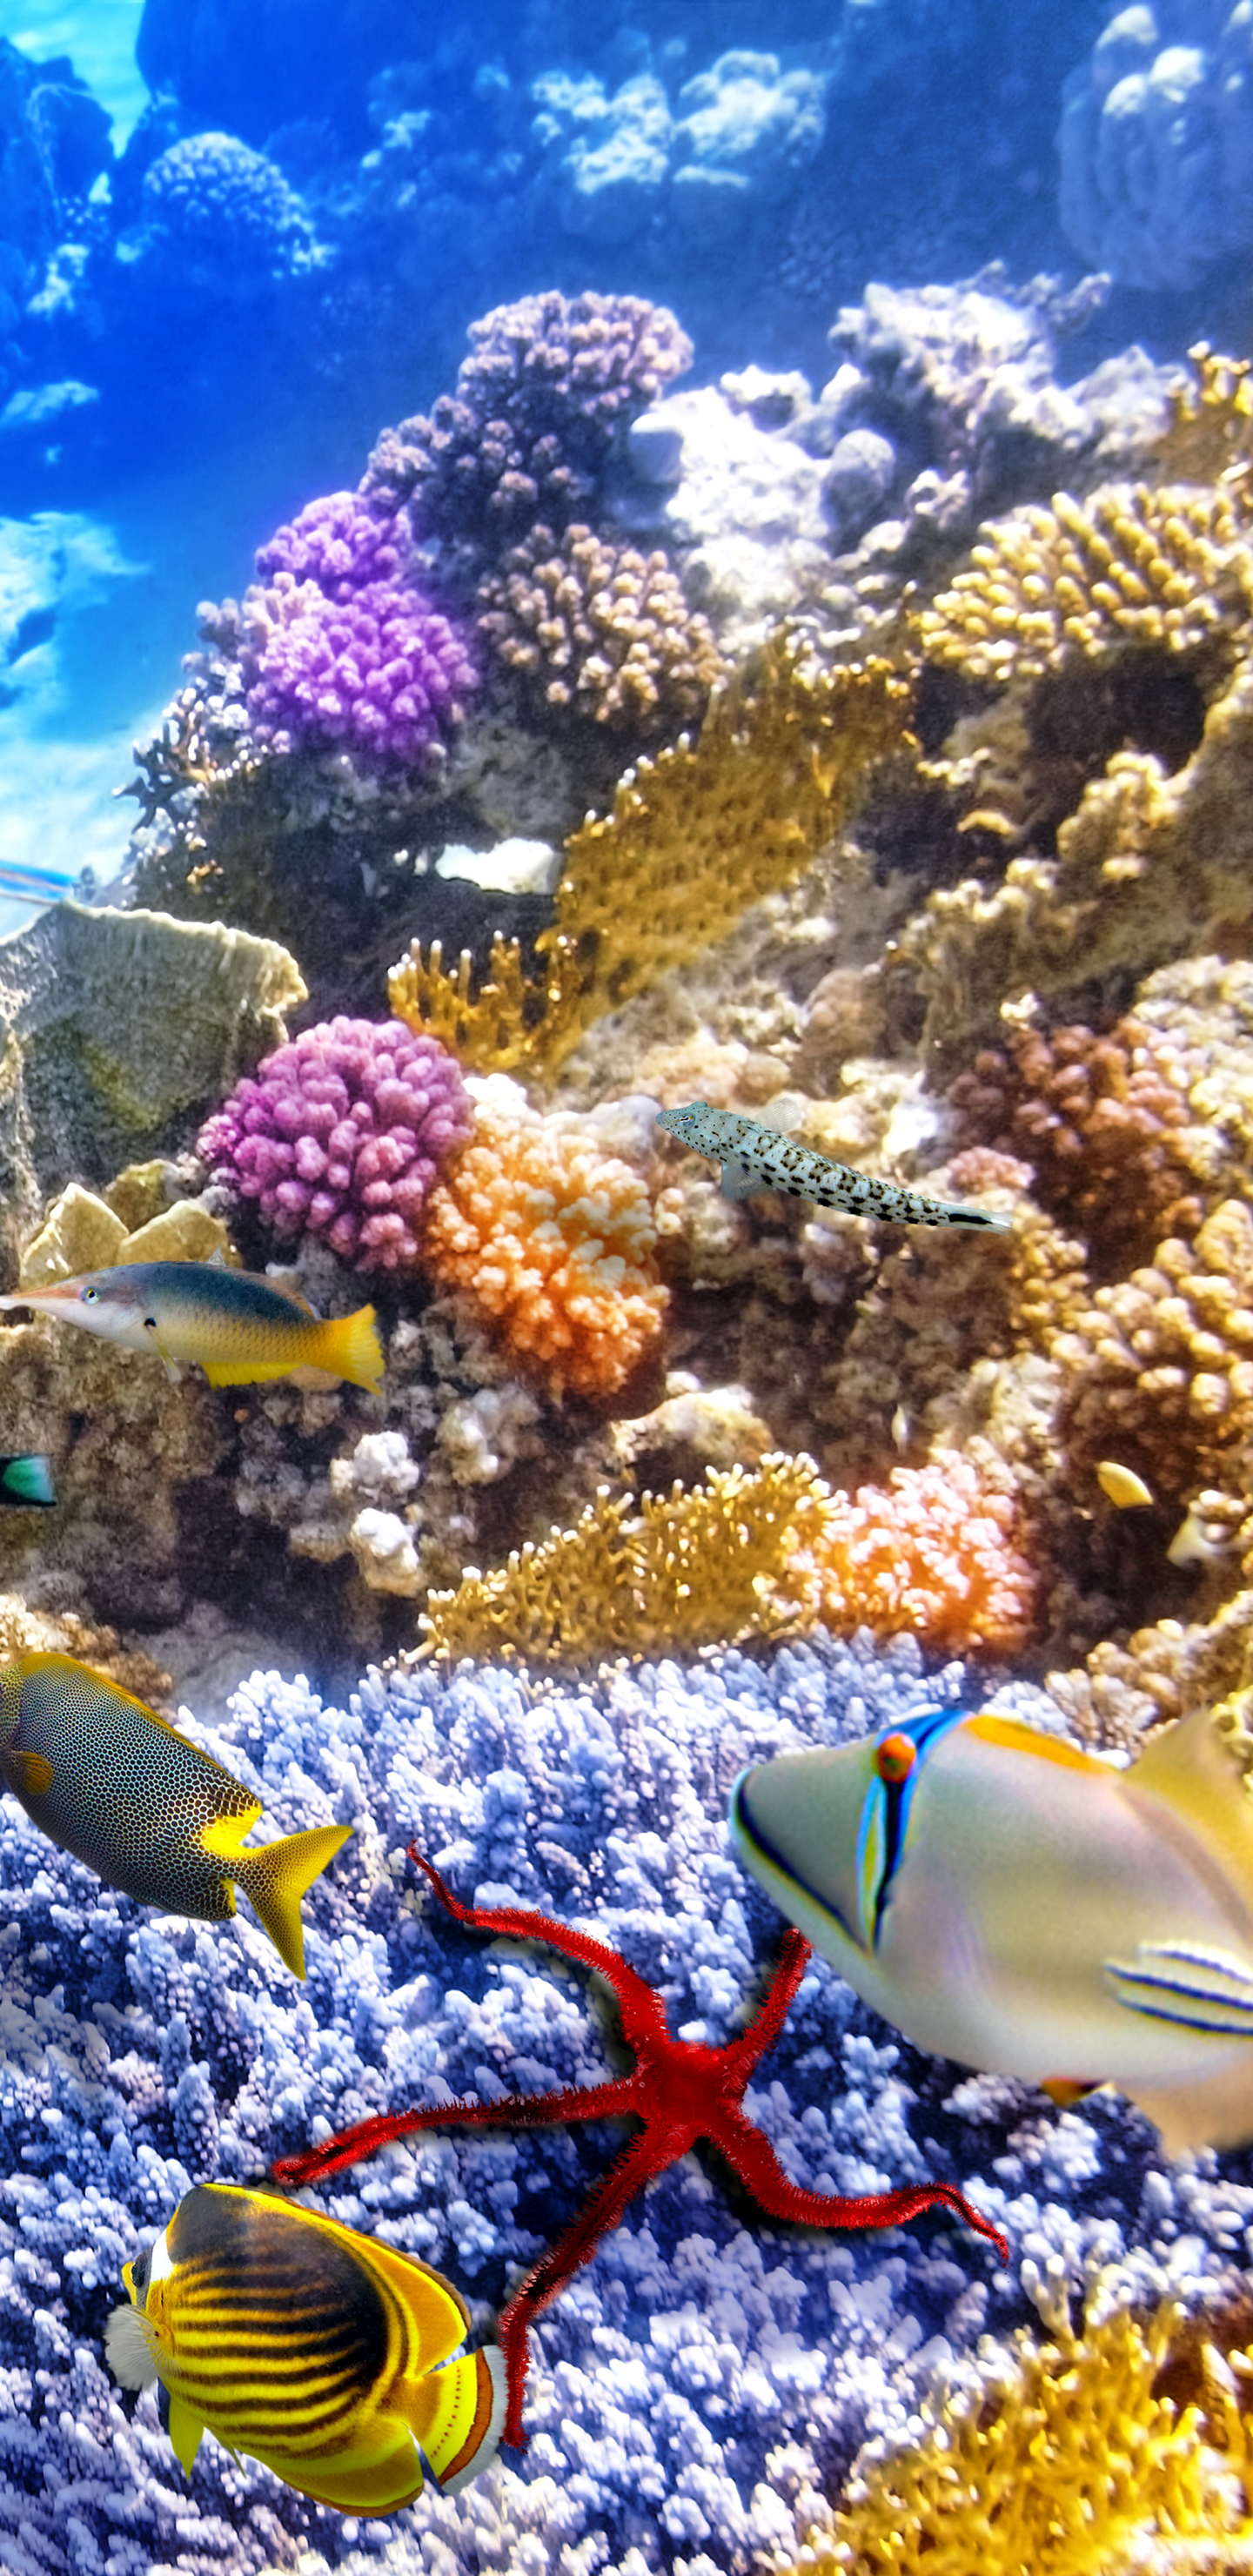 1162362 baixar imagens animais, peixe, coral, corais, embaixo da agua, peixes - papéis de parede e protetores de tela gratuitamente